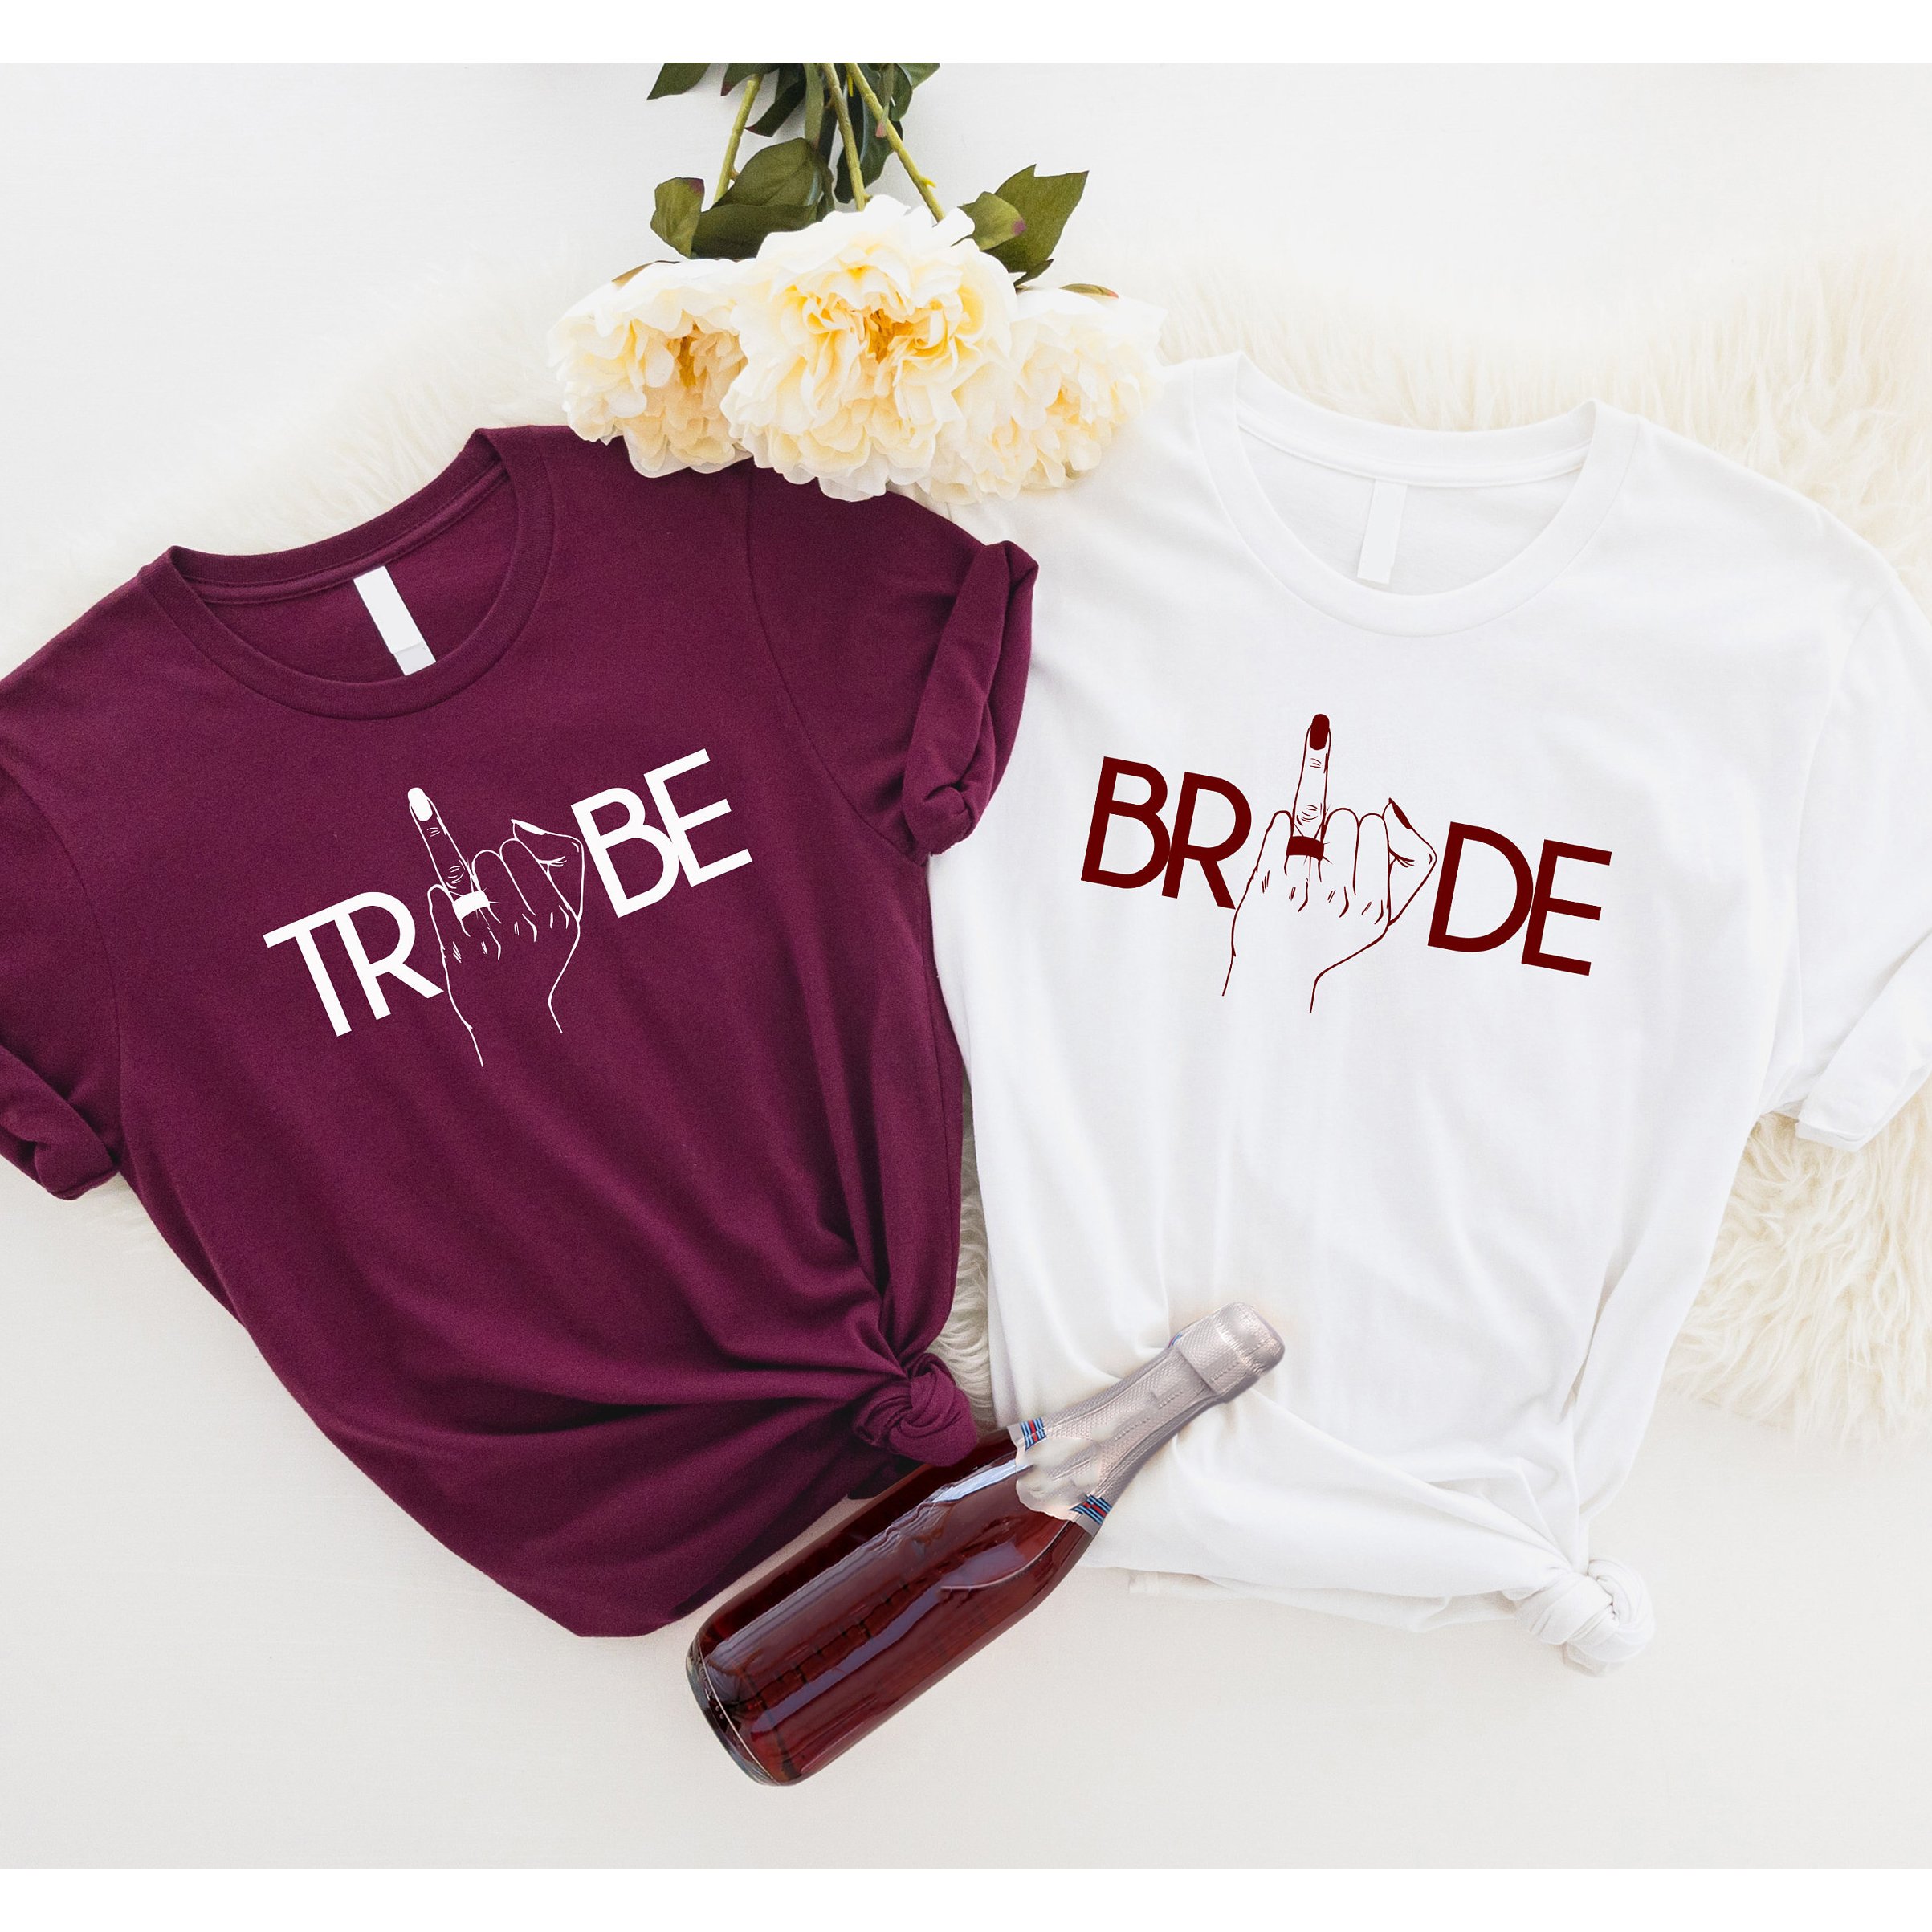 Tride tribe bachelorette shirts ? GST